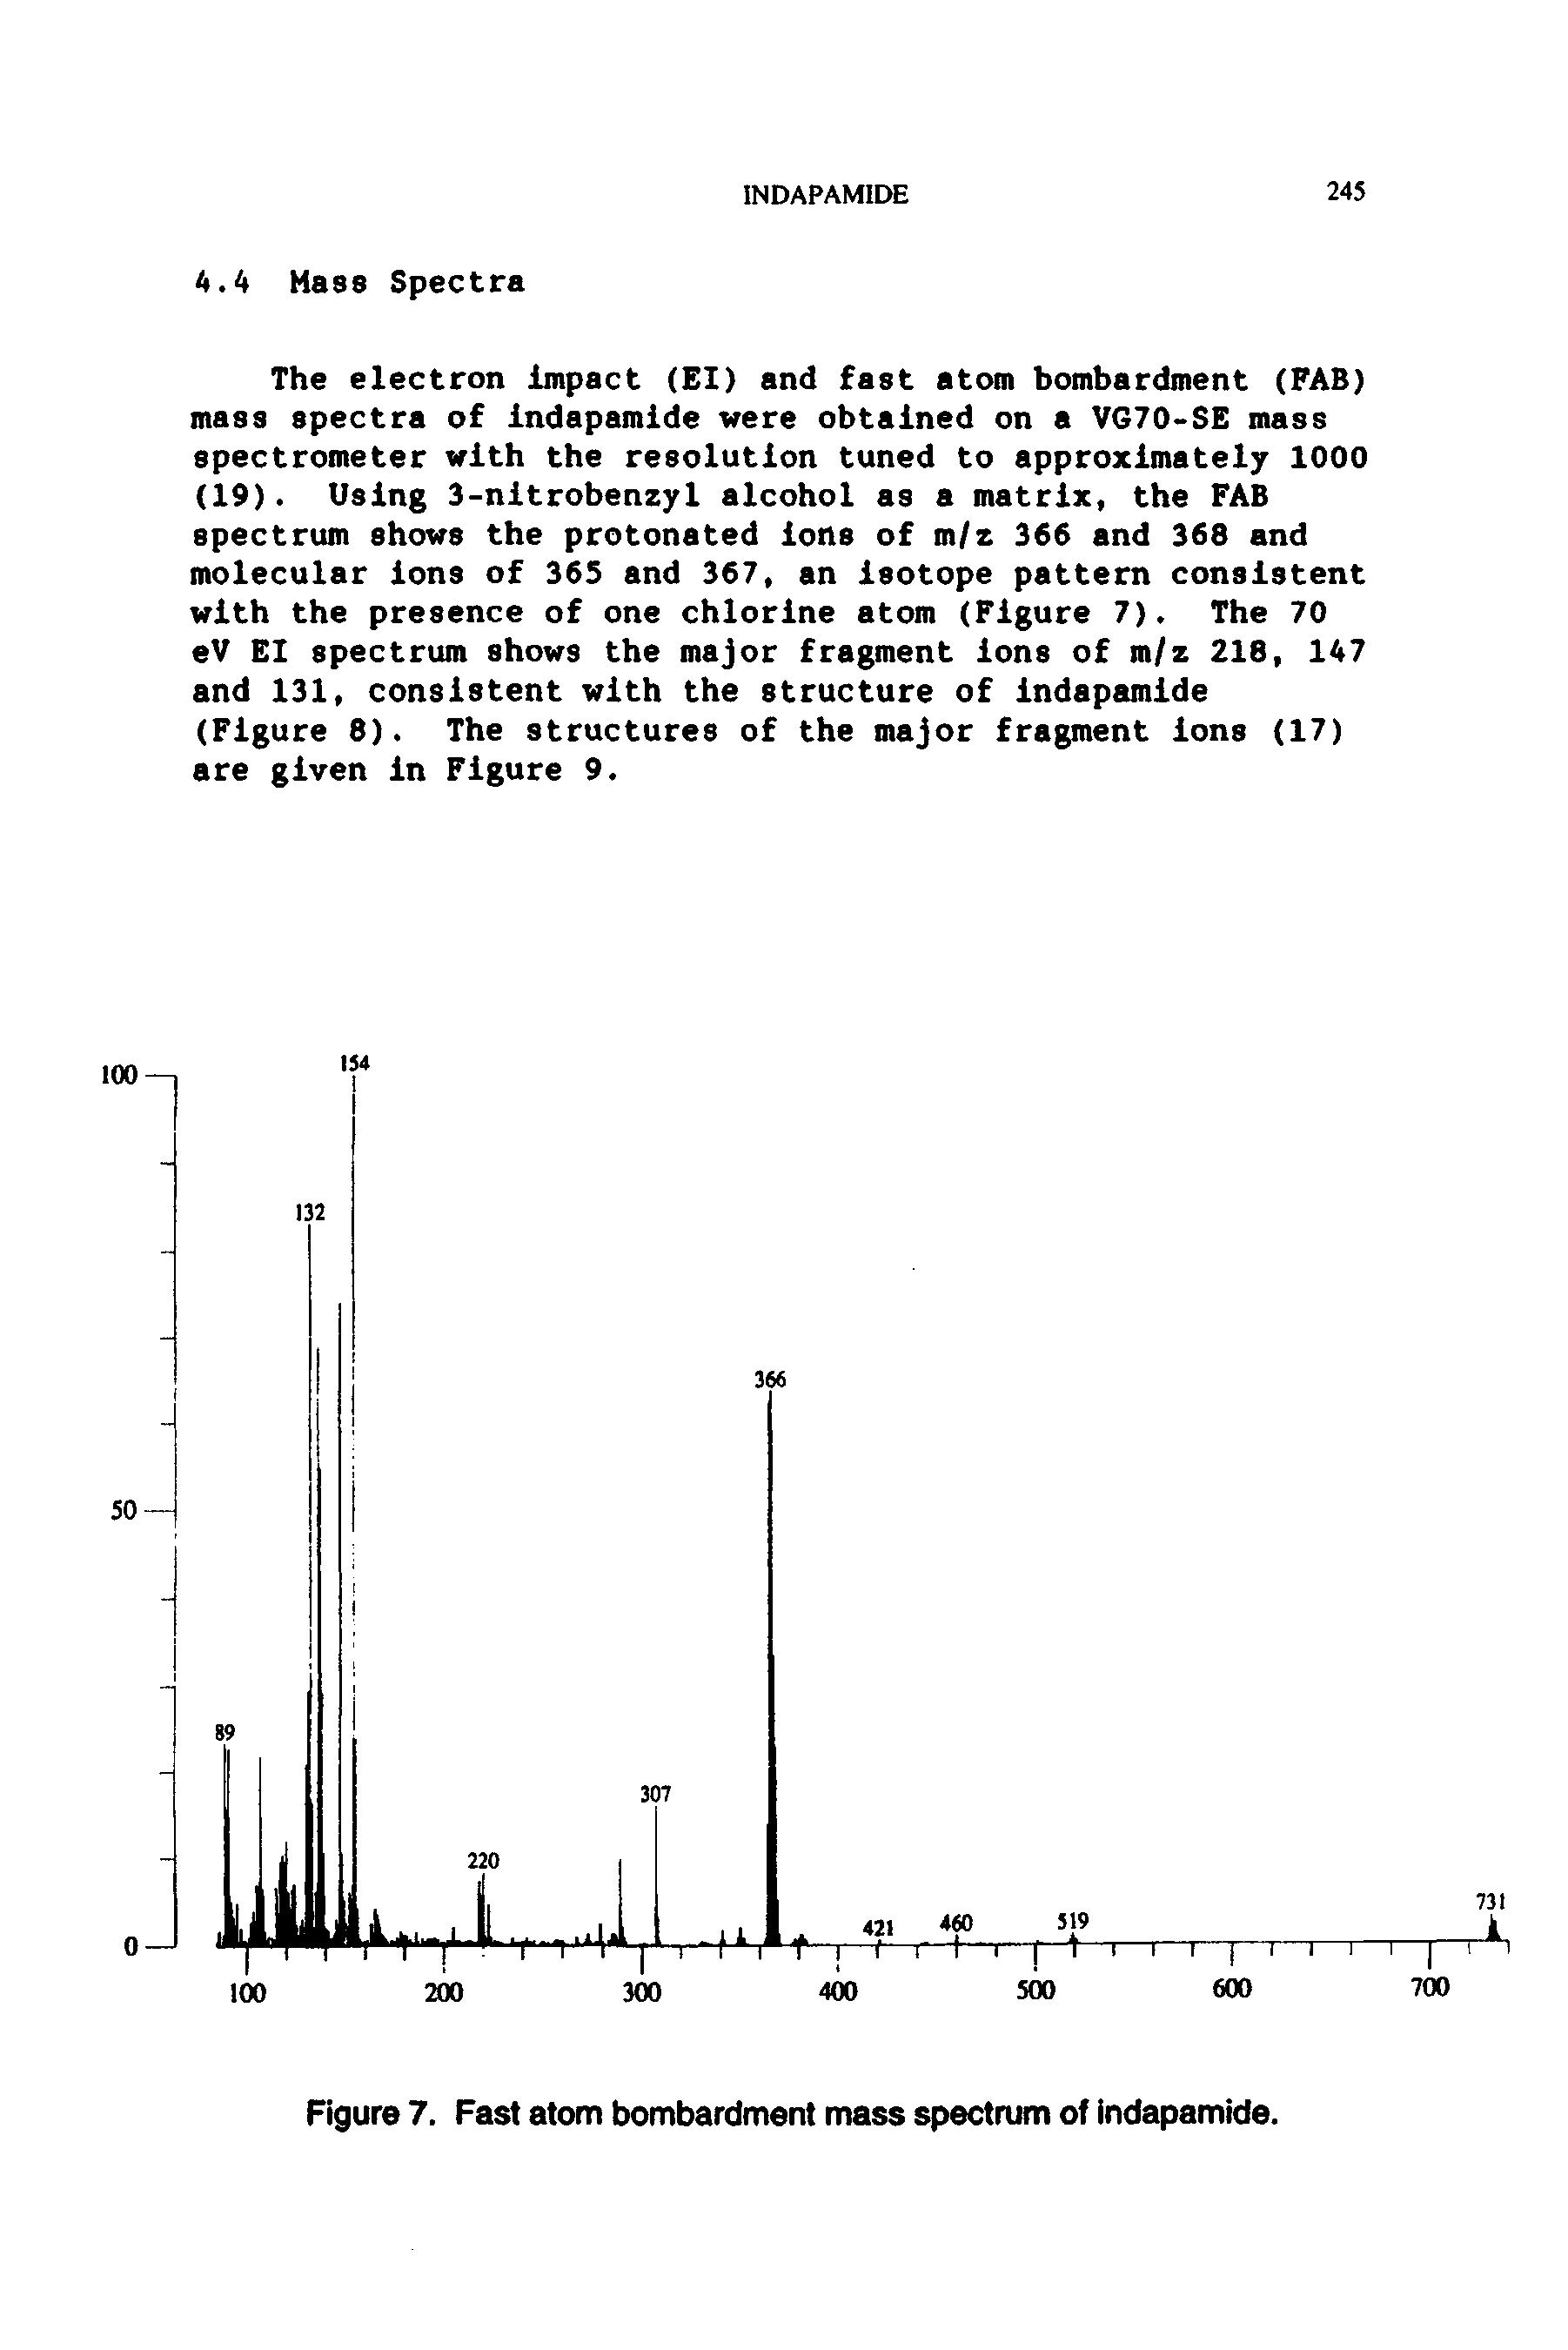 Figure 7. Fast atom bombardment mass spectrum of indapamide.